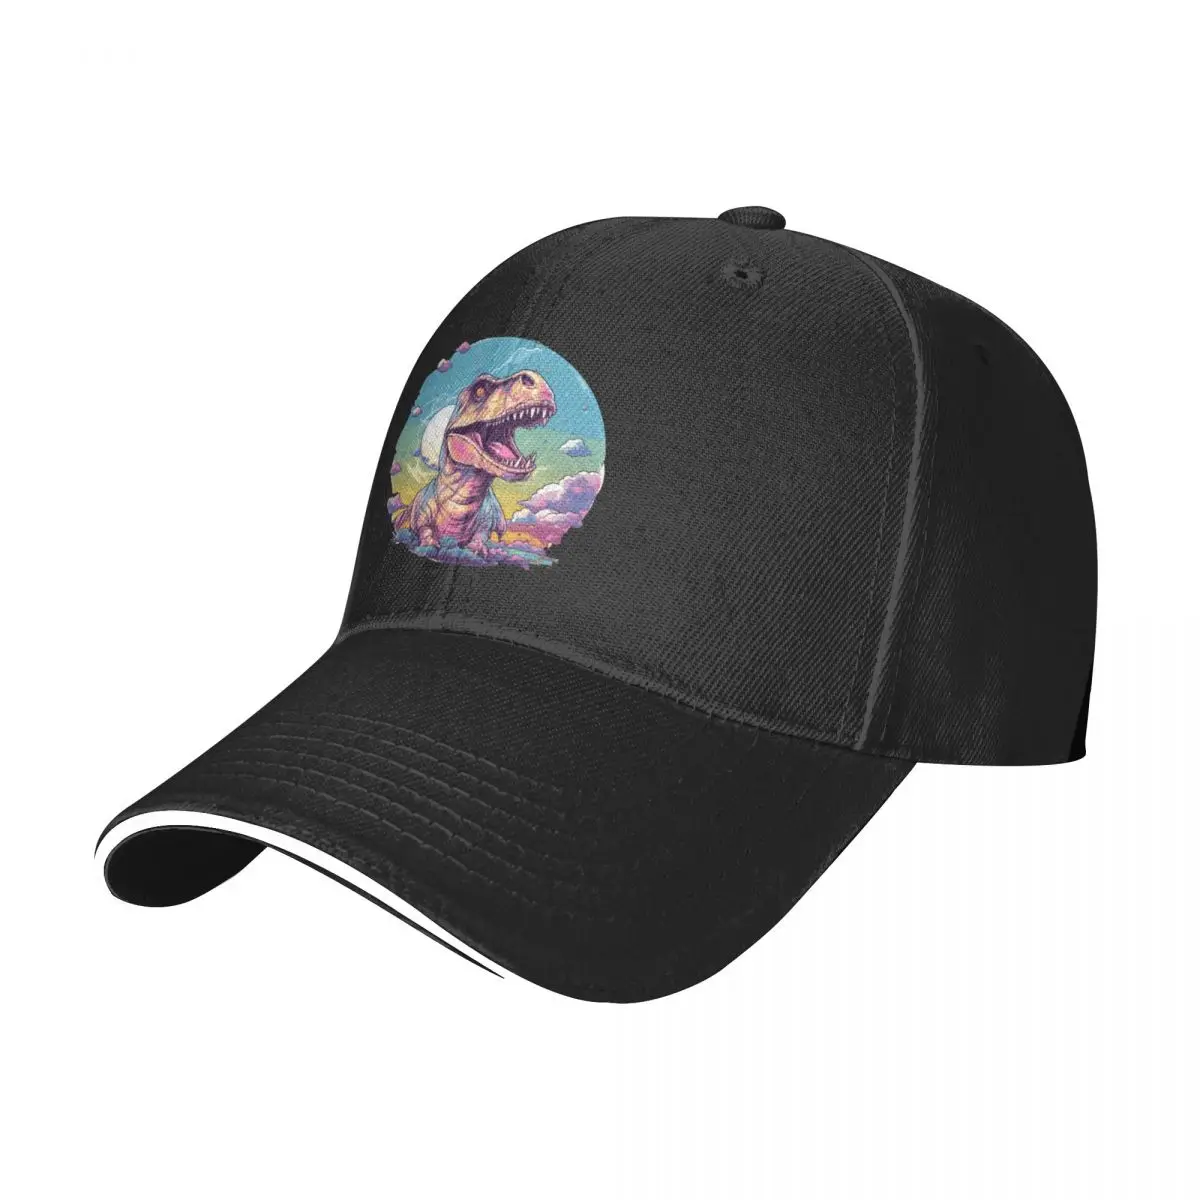 

Dinosaur Baseball Cap Sky Landscape Kpop Adjustable Trucker Hat Cool Printed Male Snapback Cap